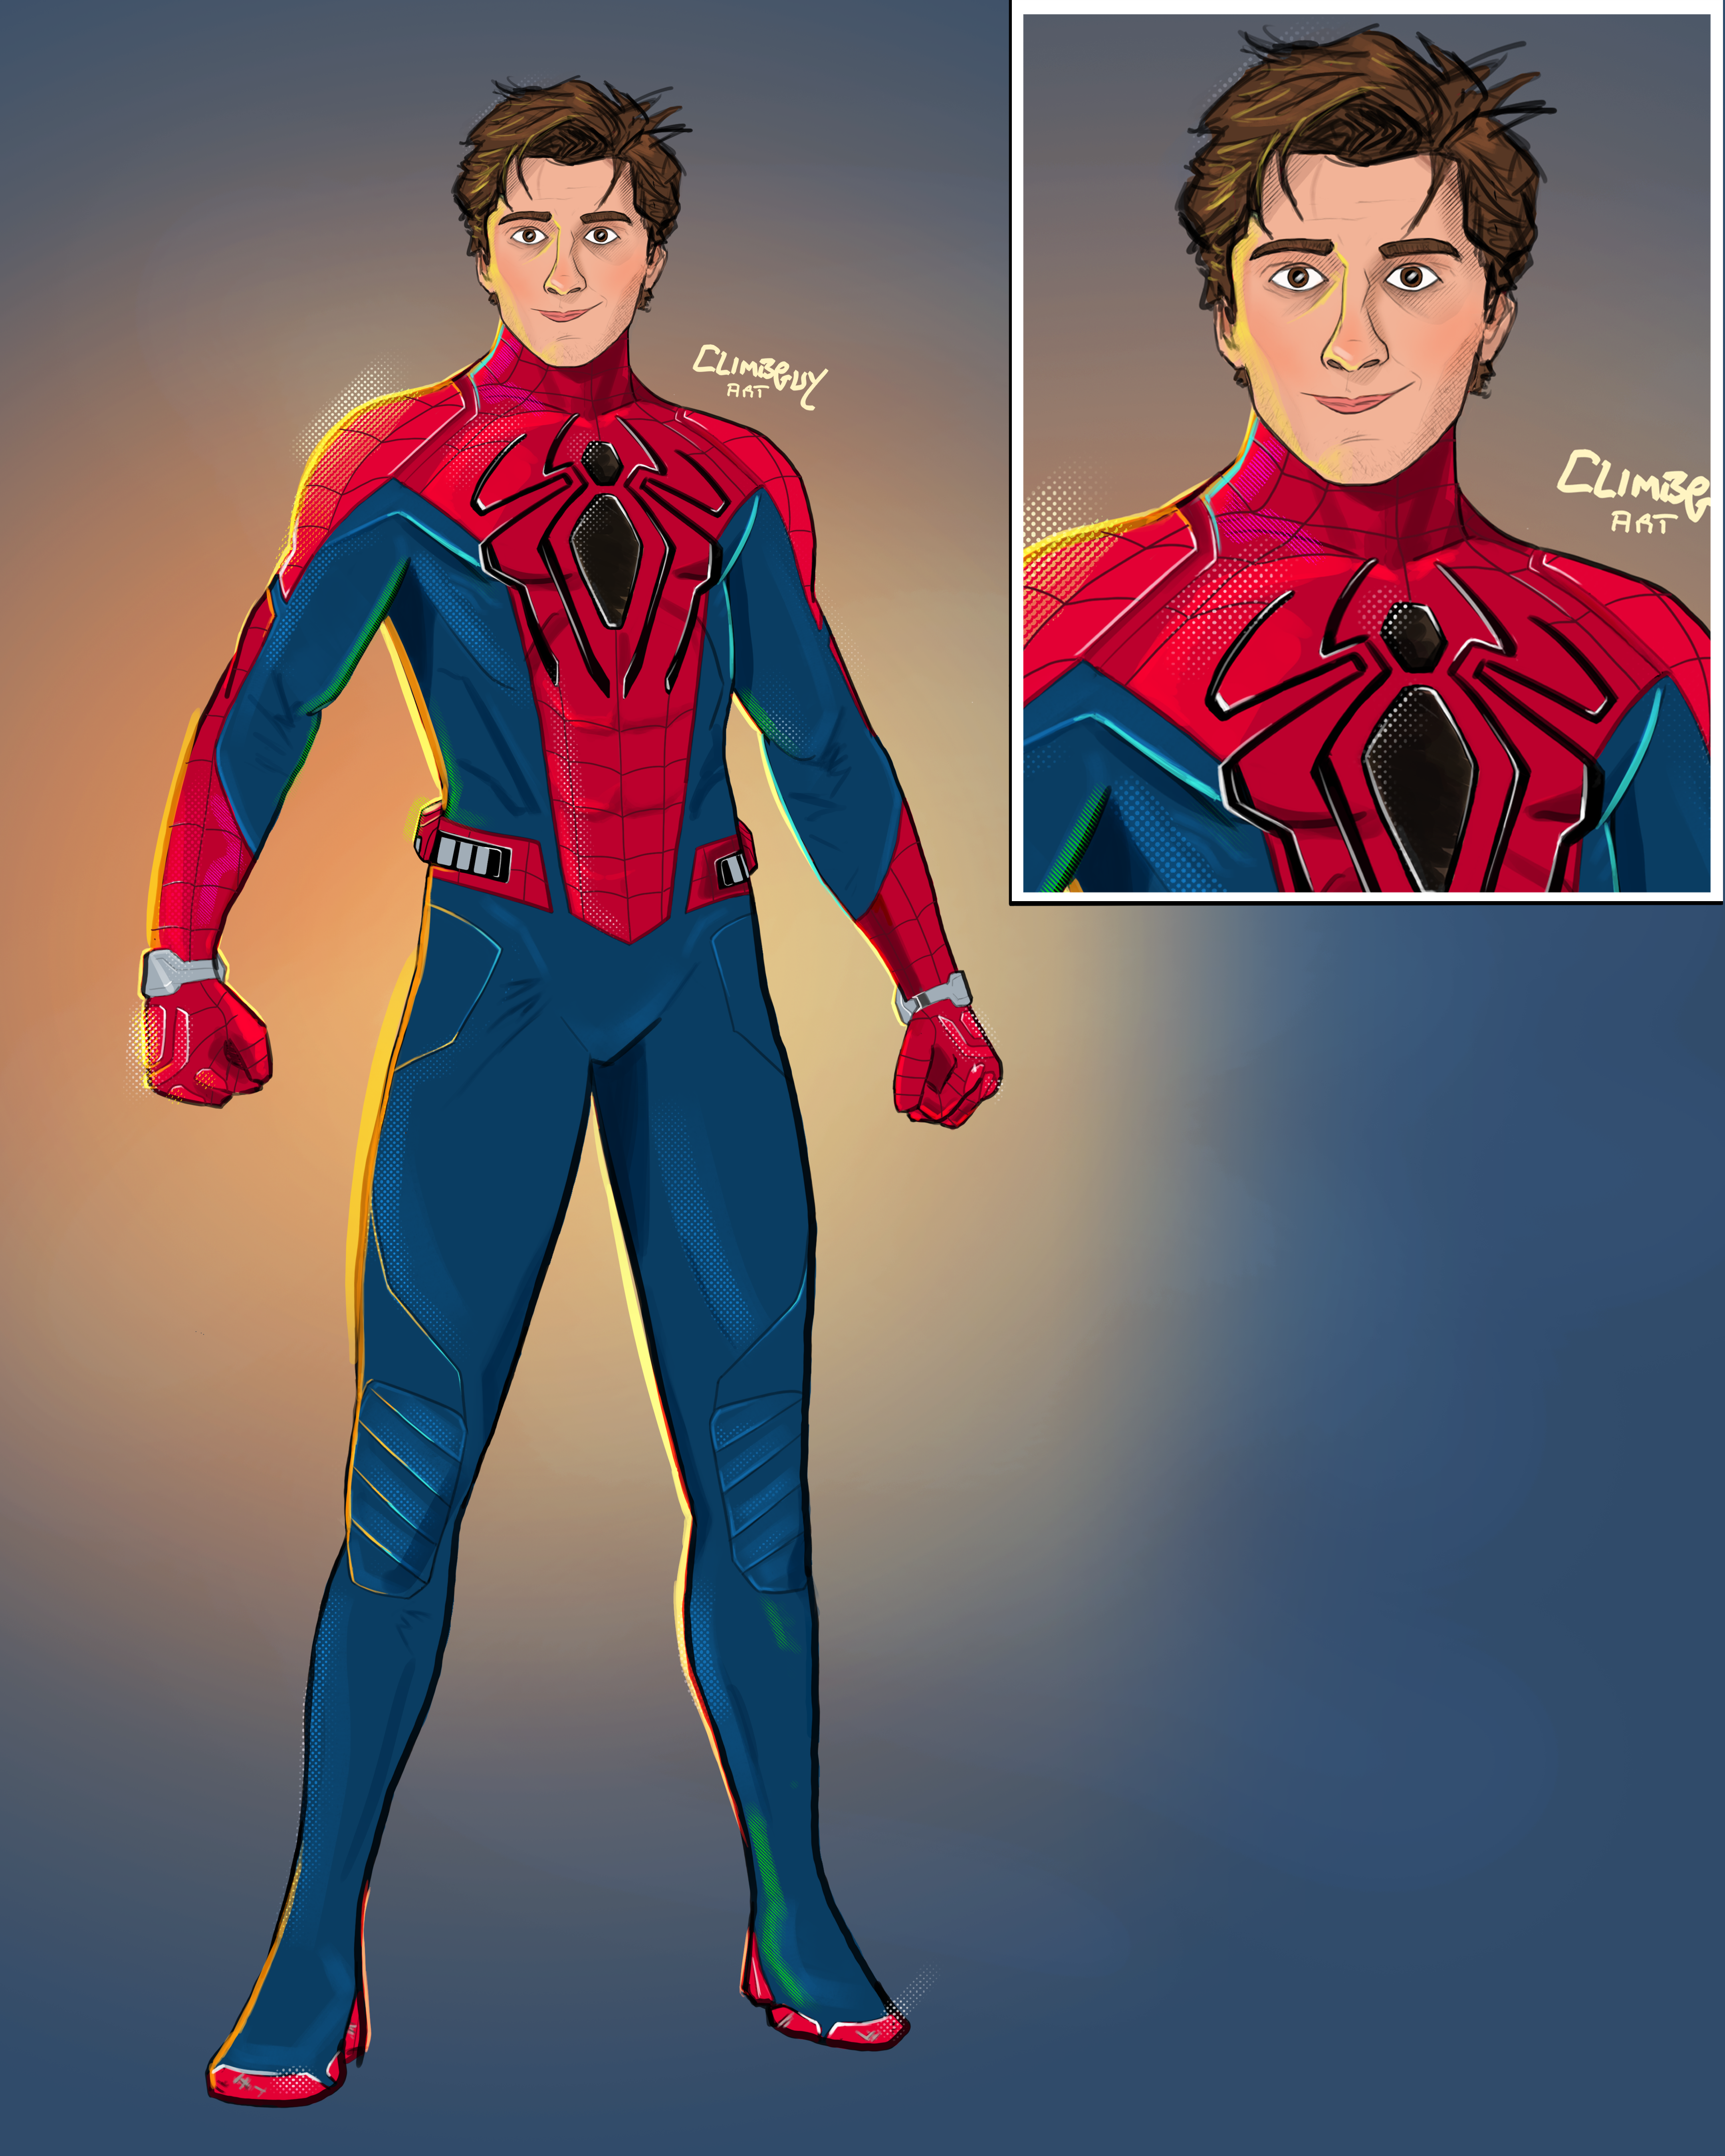 Peter-Parker, Spider-Man by climbguy on DeviantArt